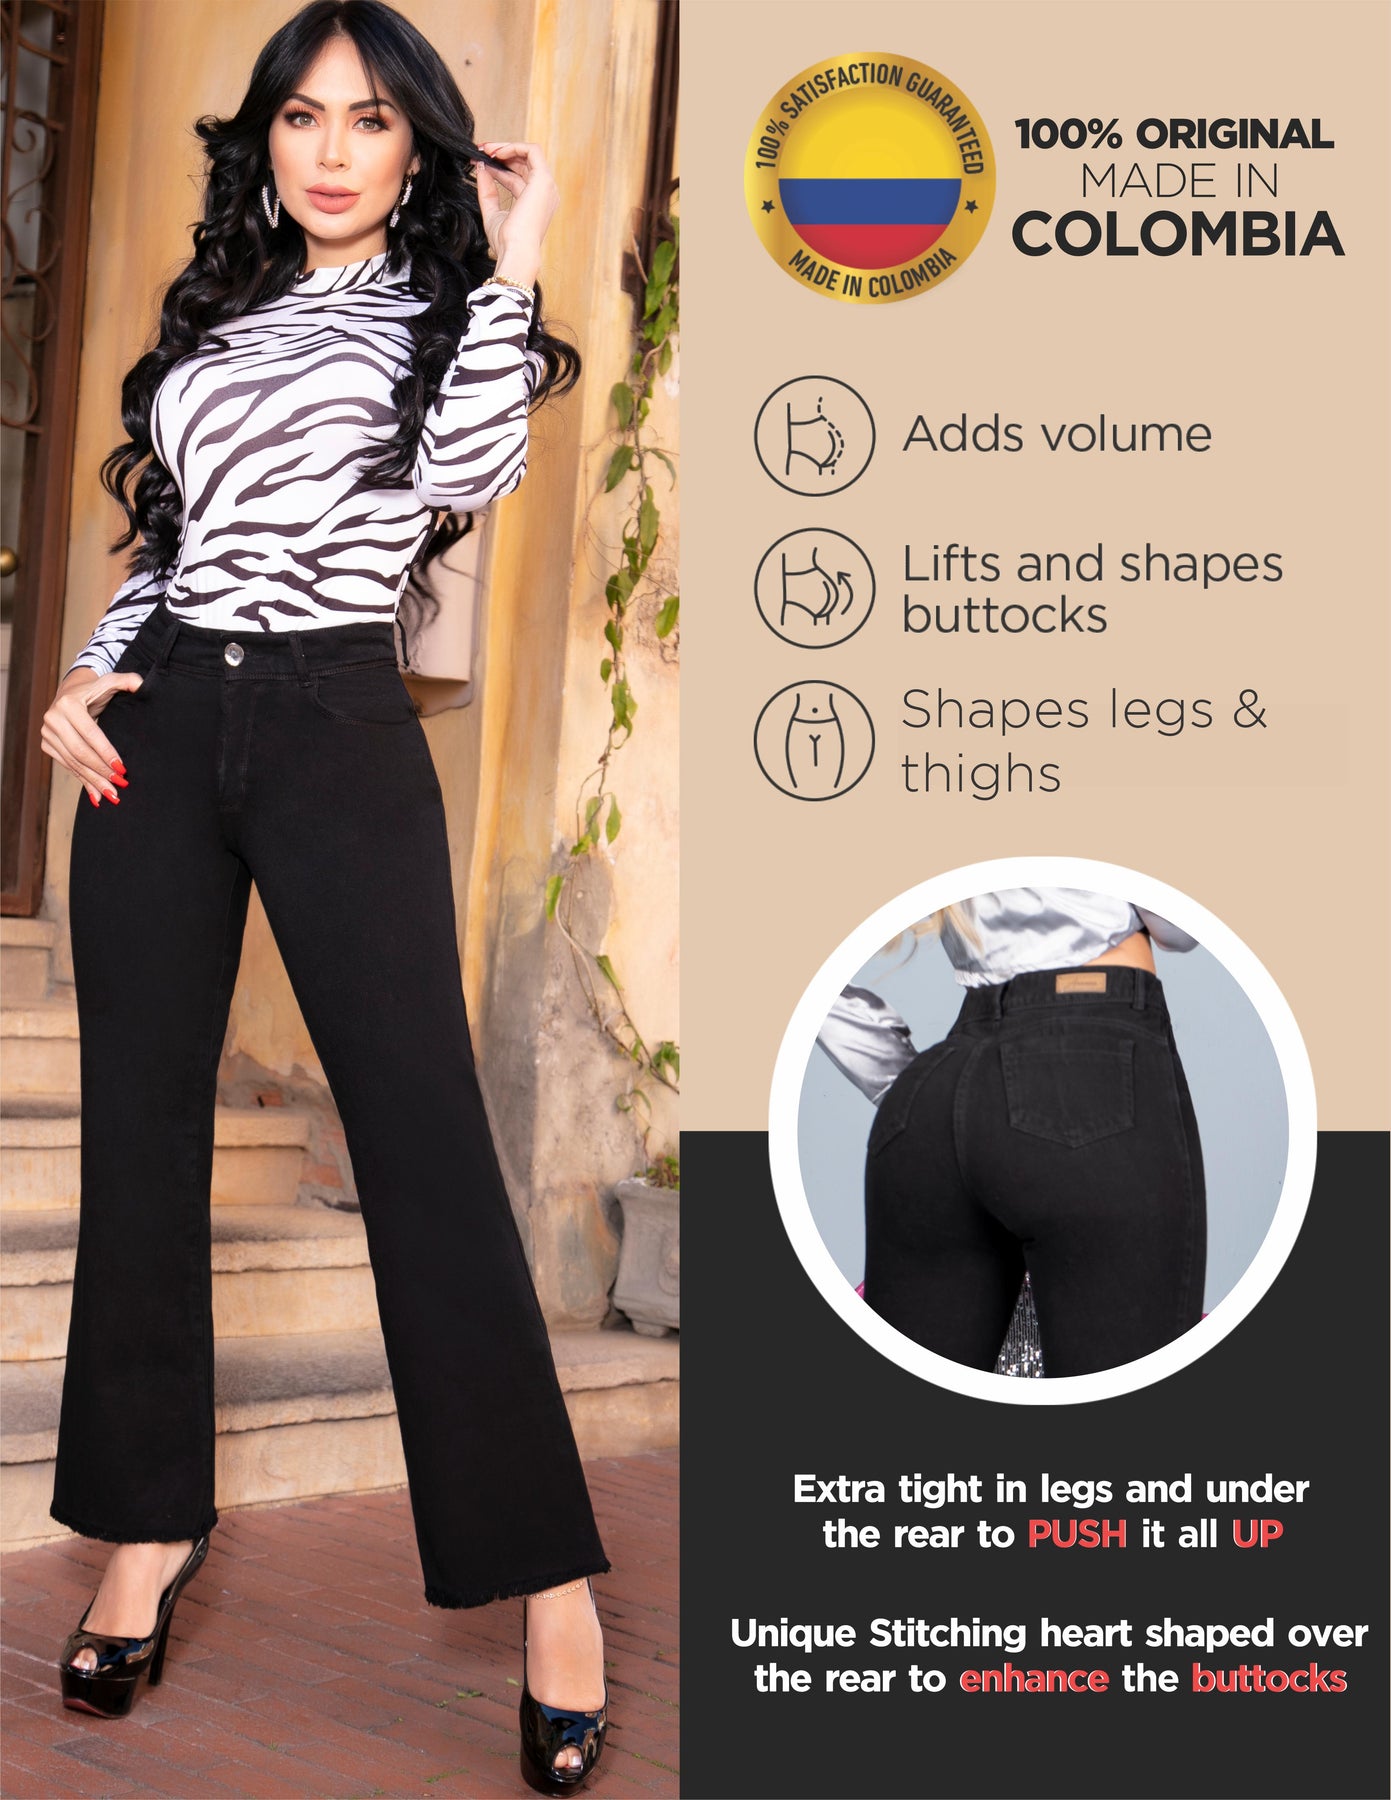 Colombian Pants UP Jeans Butt Lifting Pantalones Colombianos Levanta C –  Aranza Shapewear